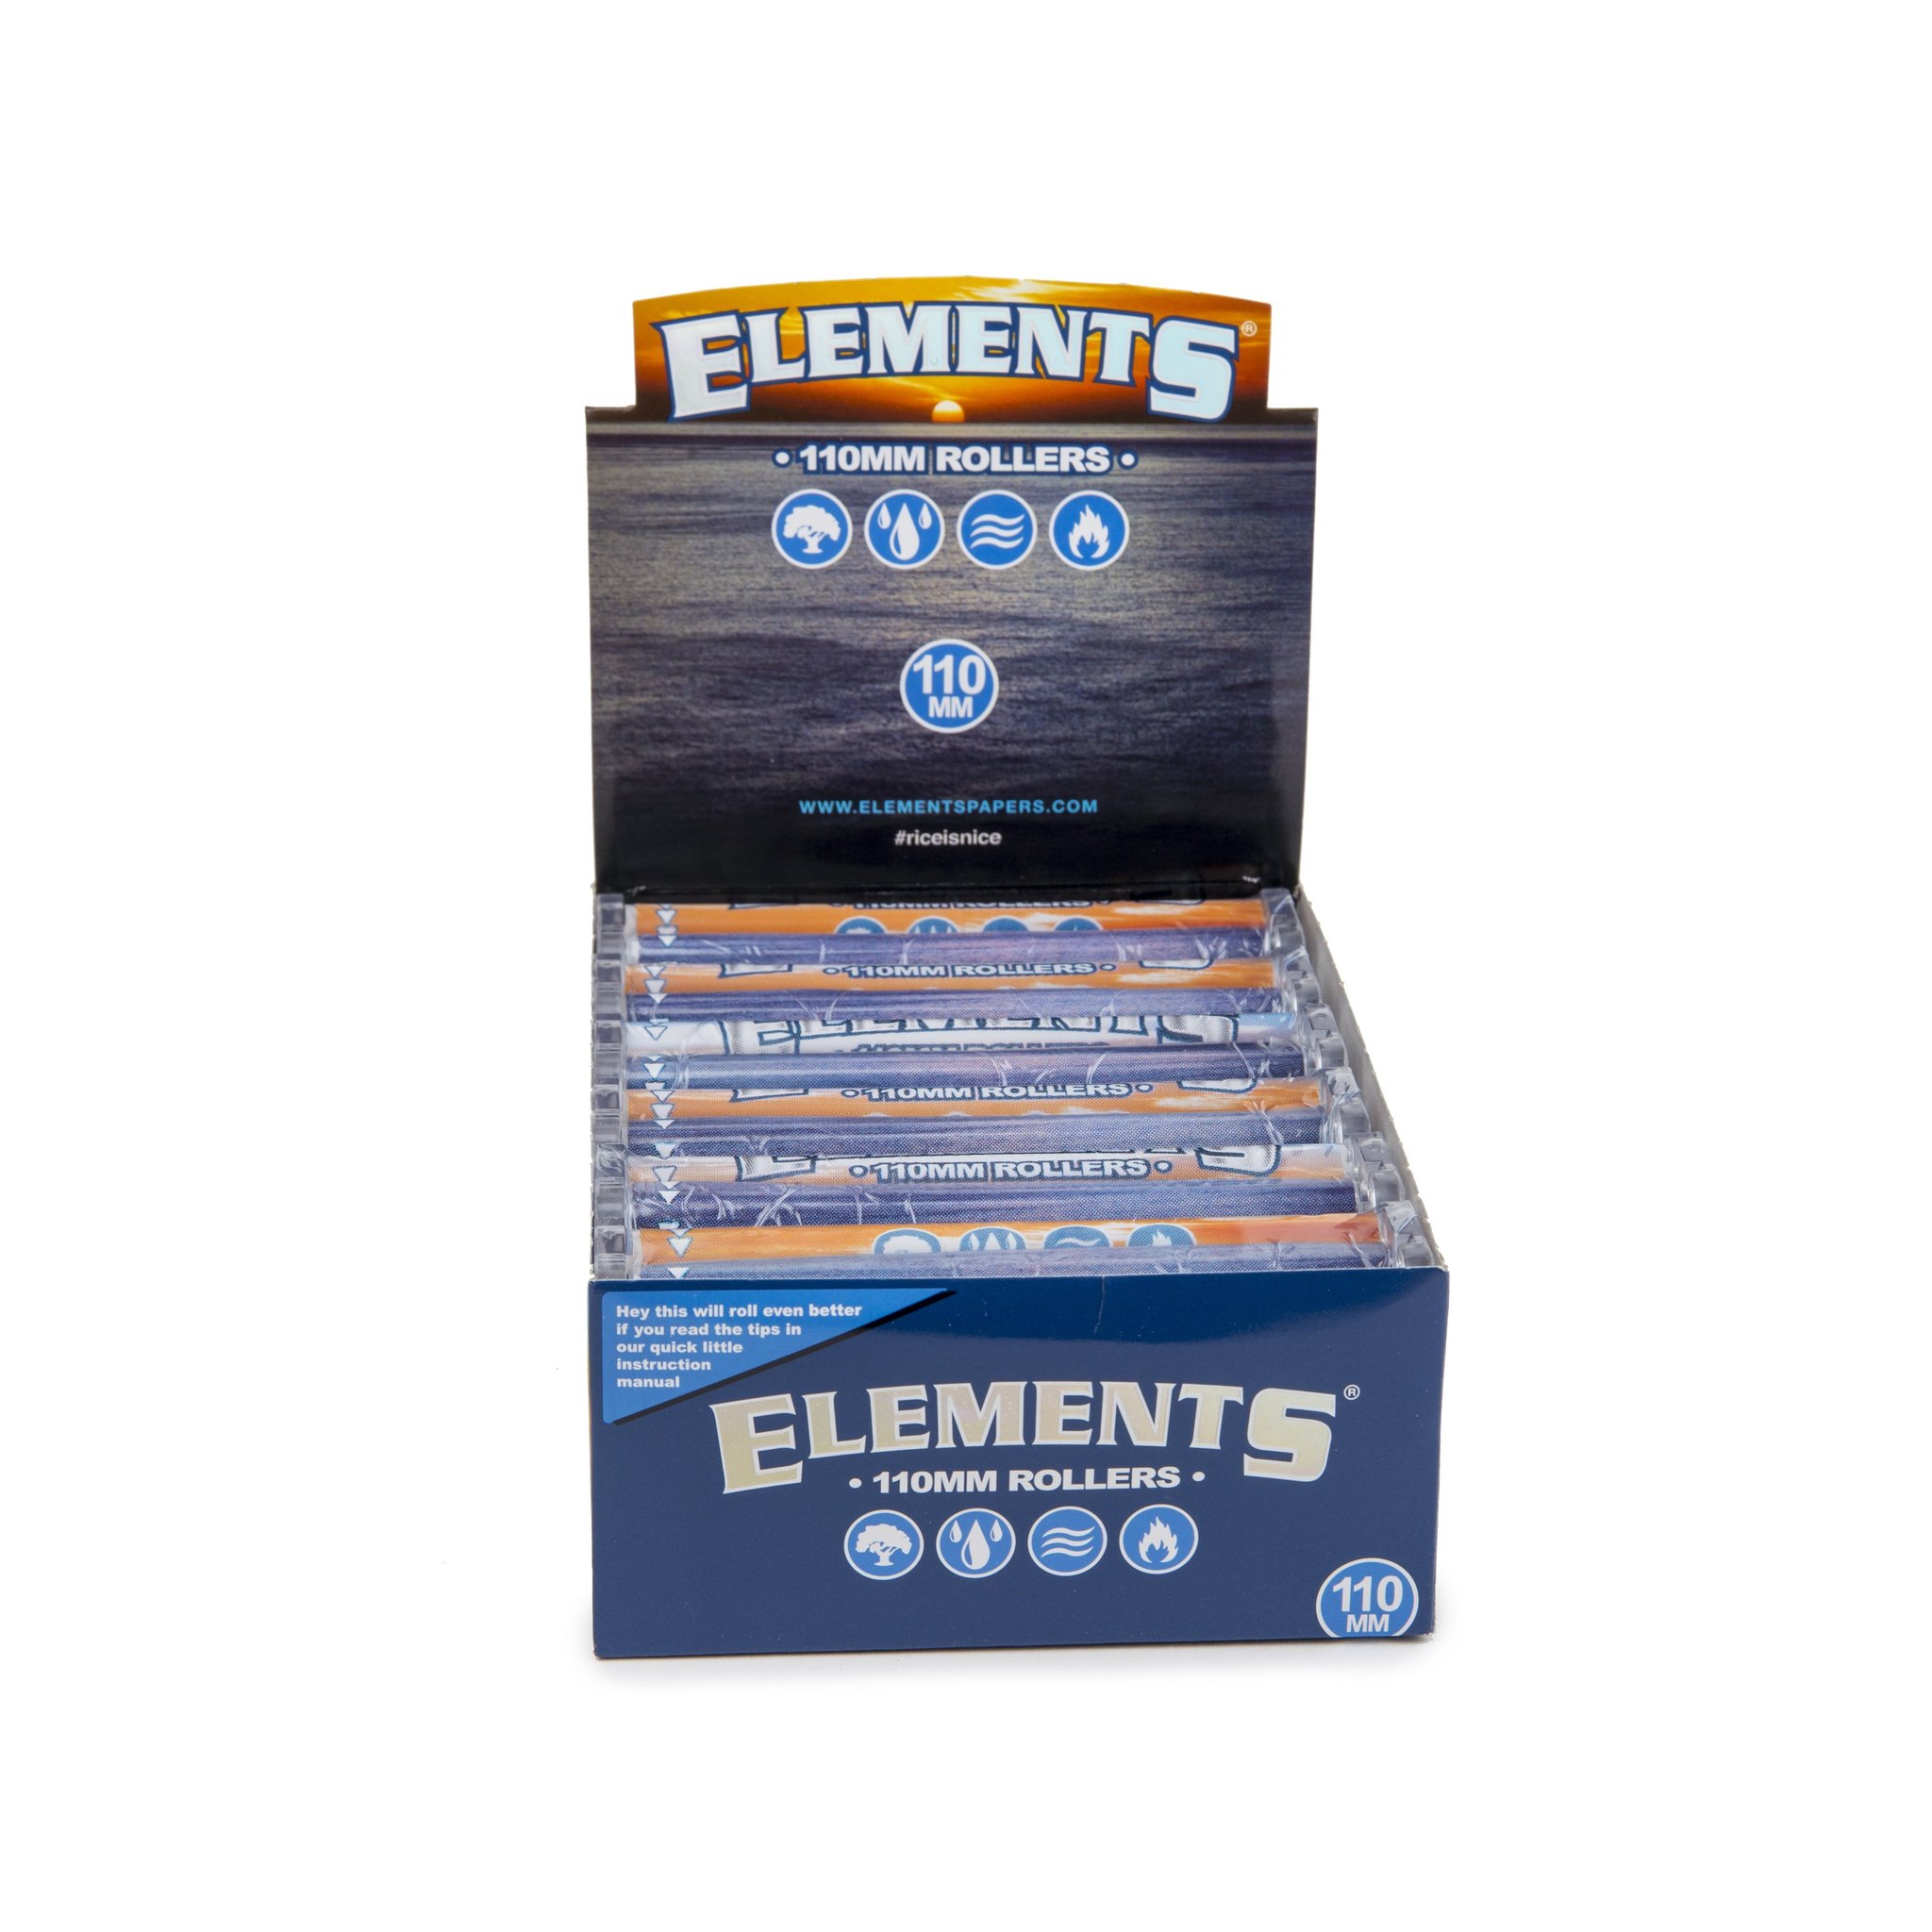 *Elements-110mm Cigarette Roller-12 Count Display #EL110